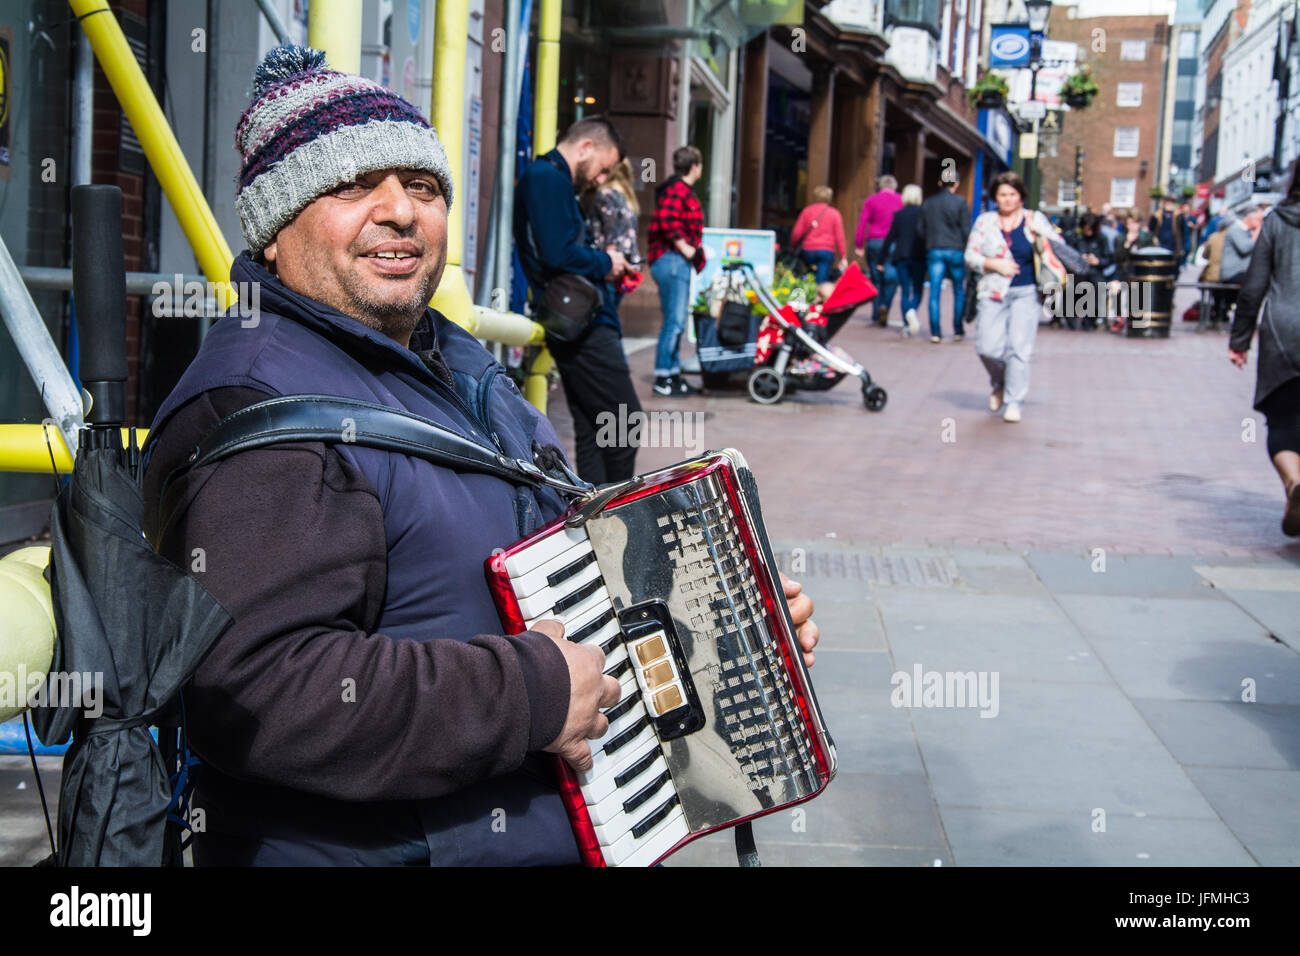 Street performer playing Turkish folk music on an accordion in Shrewsbury Towncentre, UK. Stock Photo